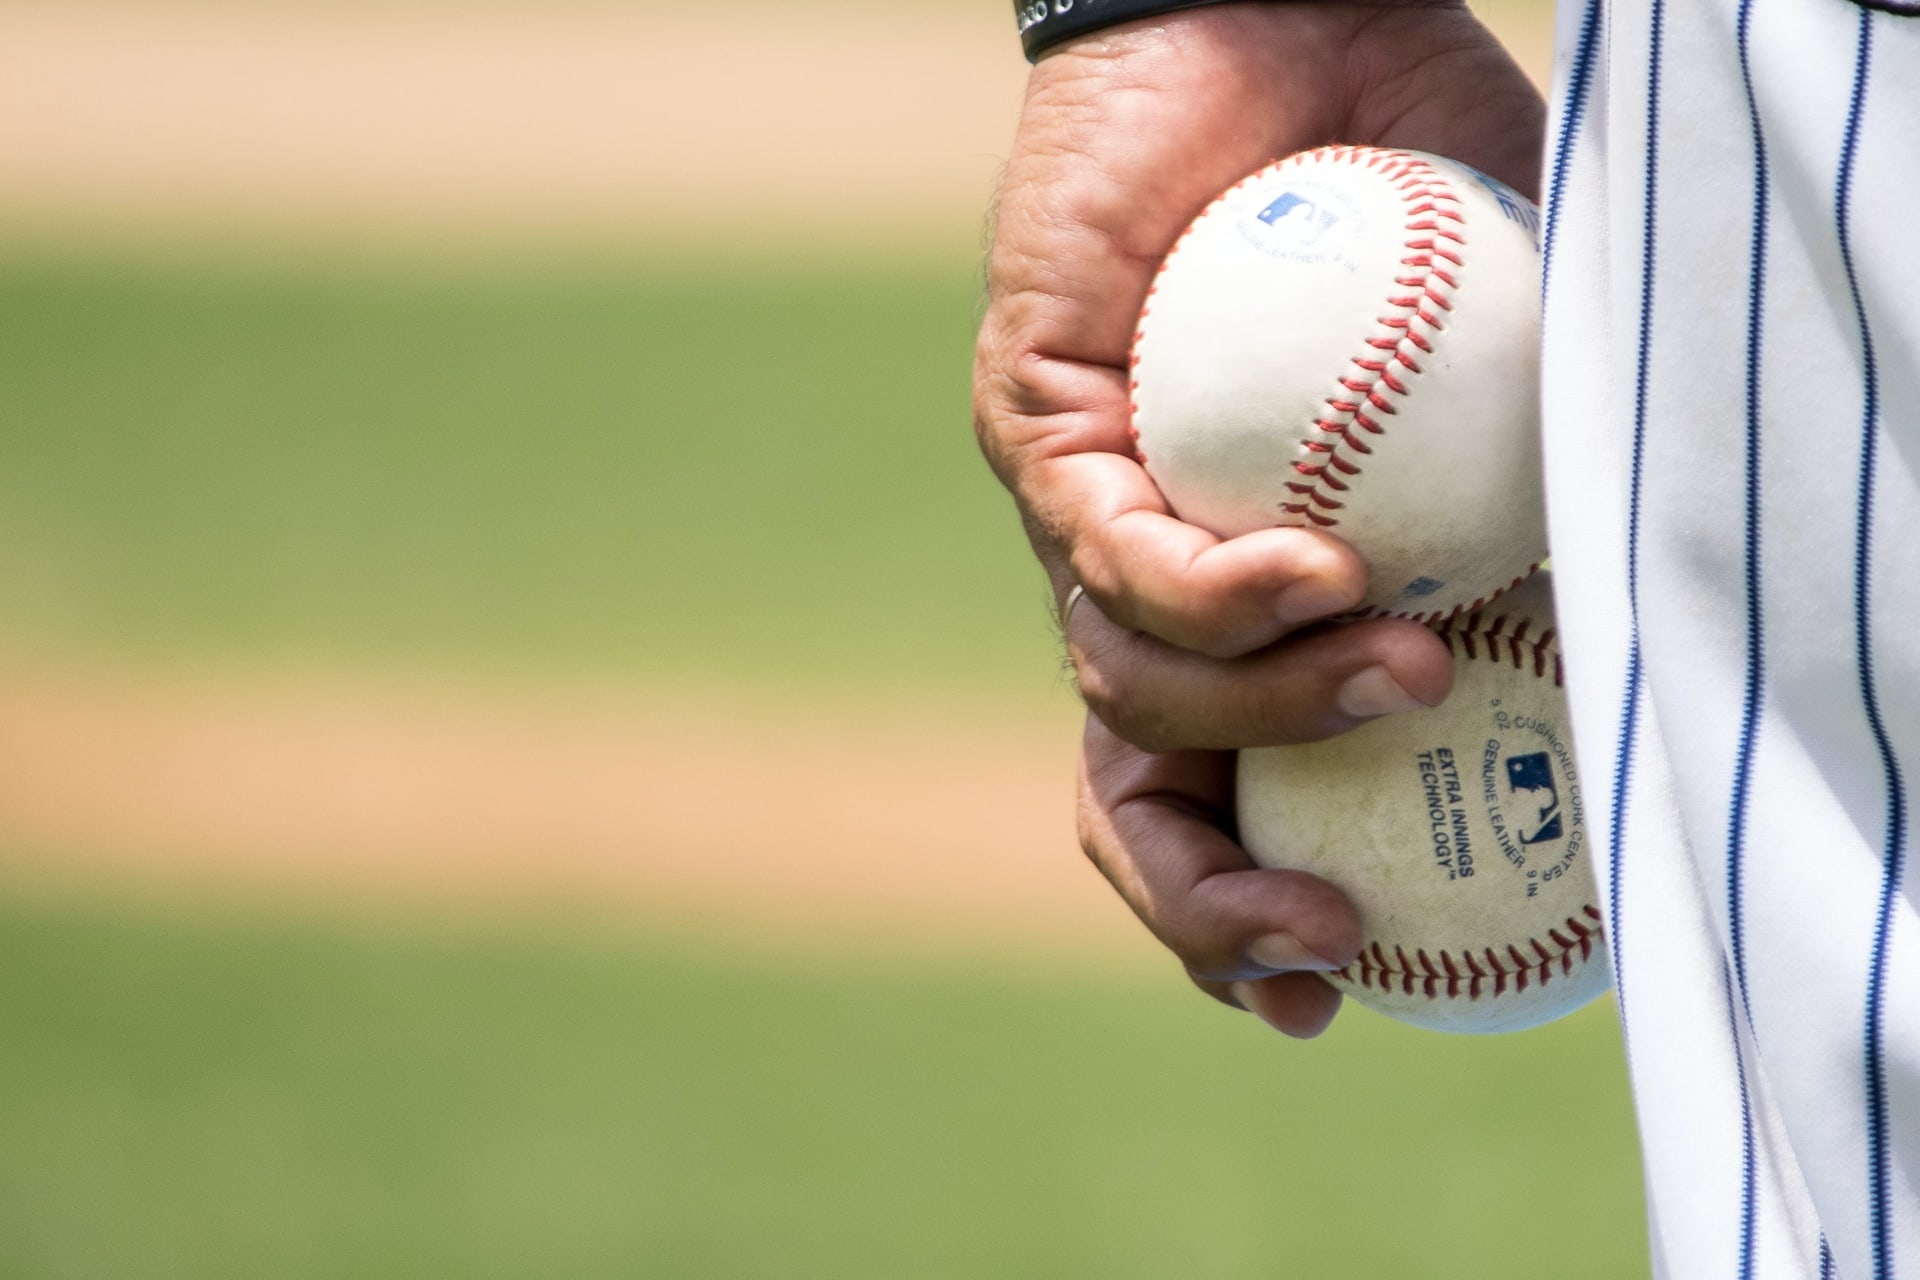 Minor League Baseball – Wage & Hour Class Action